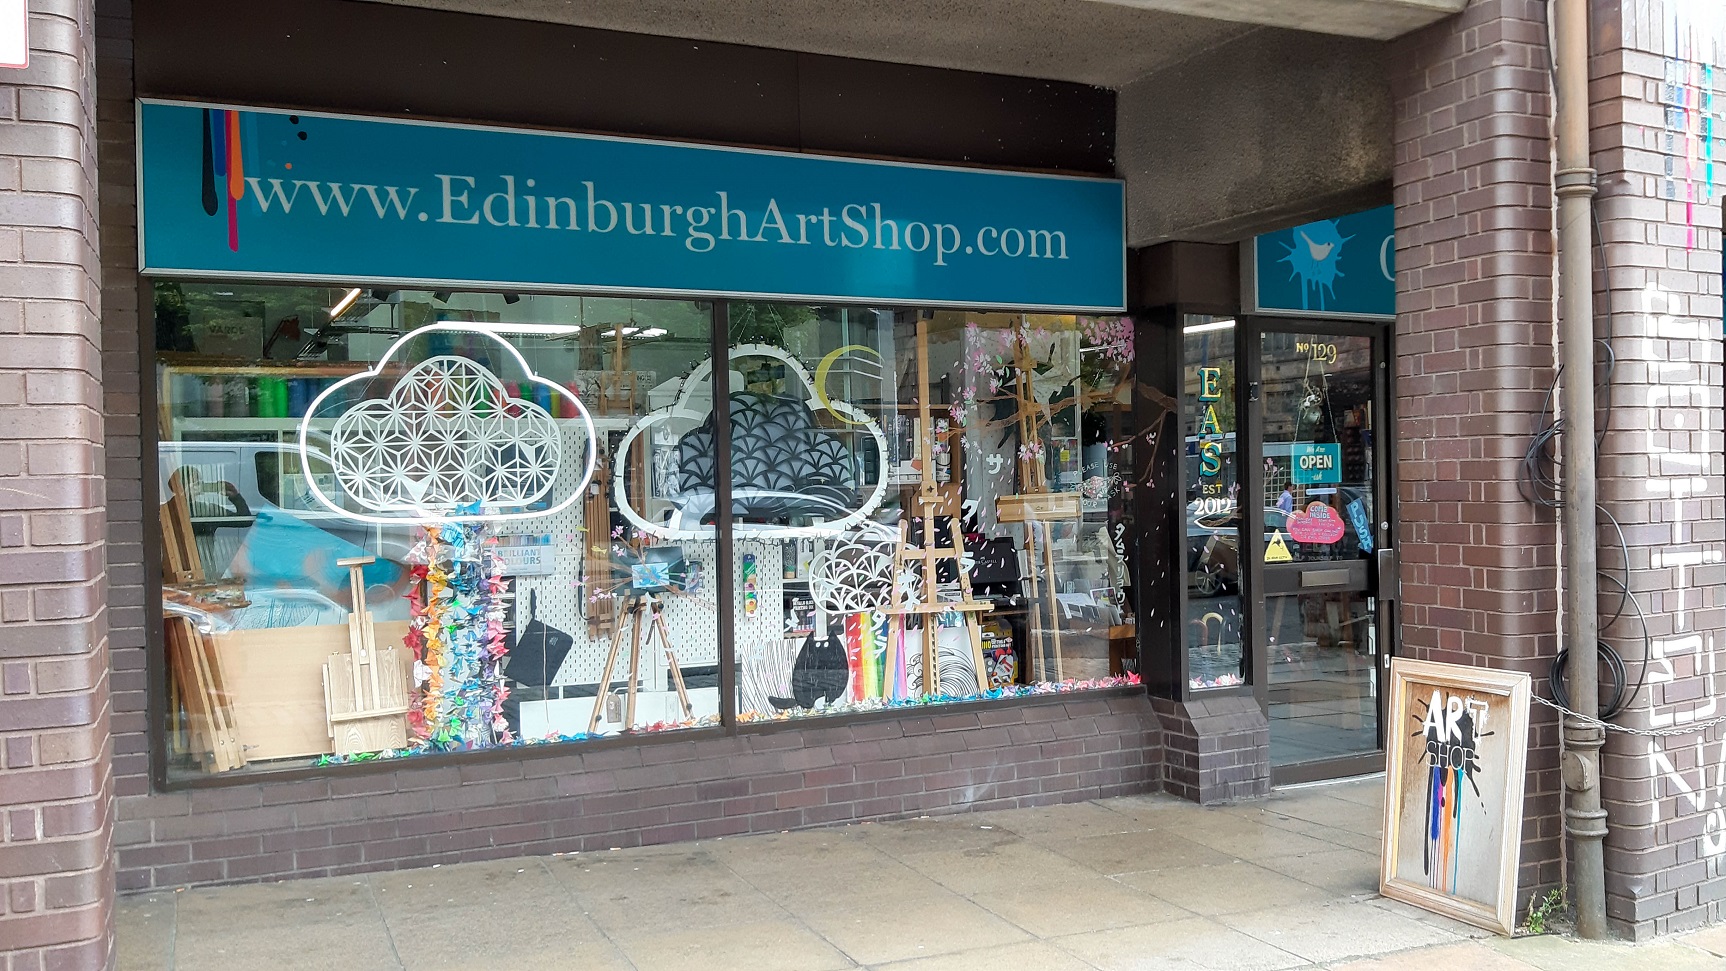 The Edinburgh Art Shop